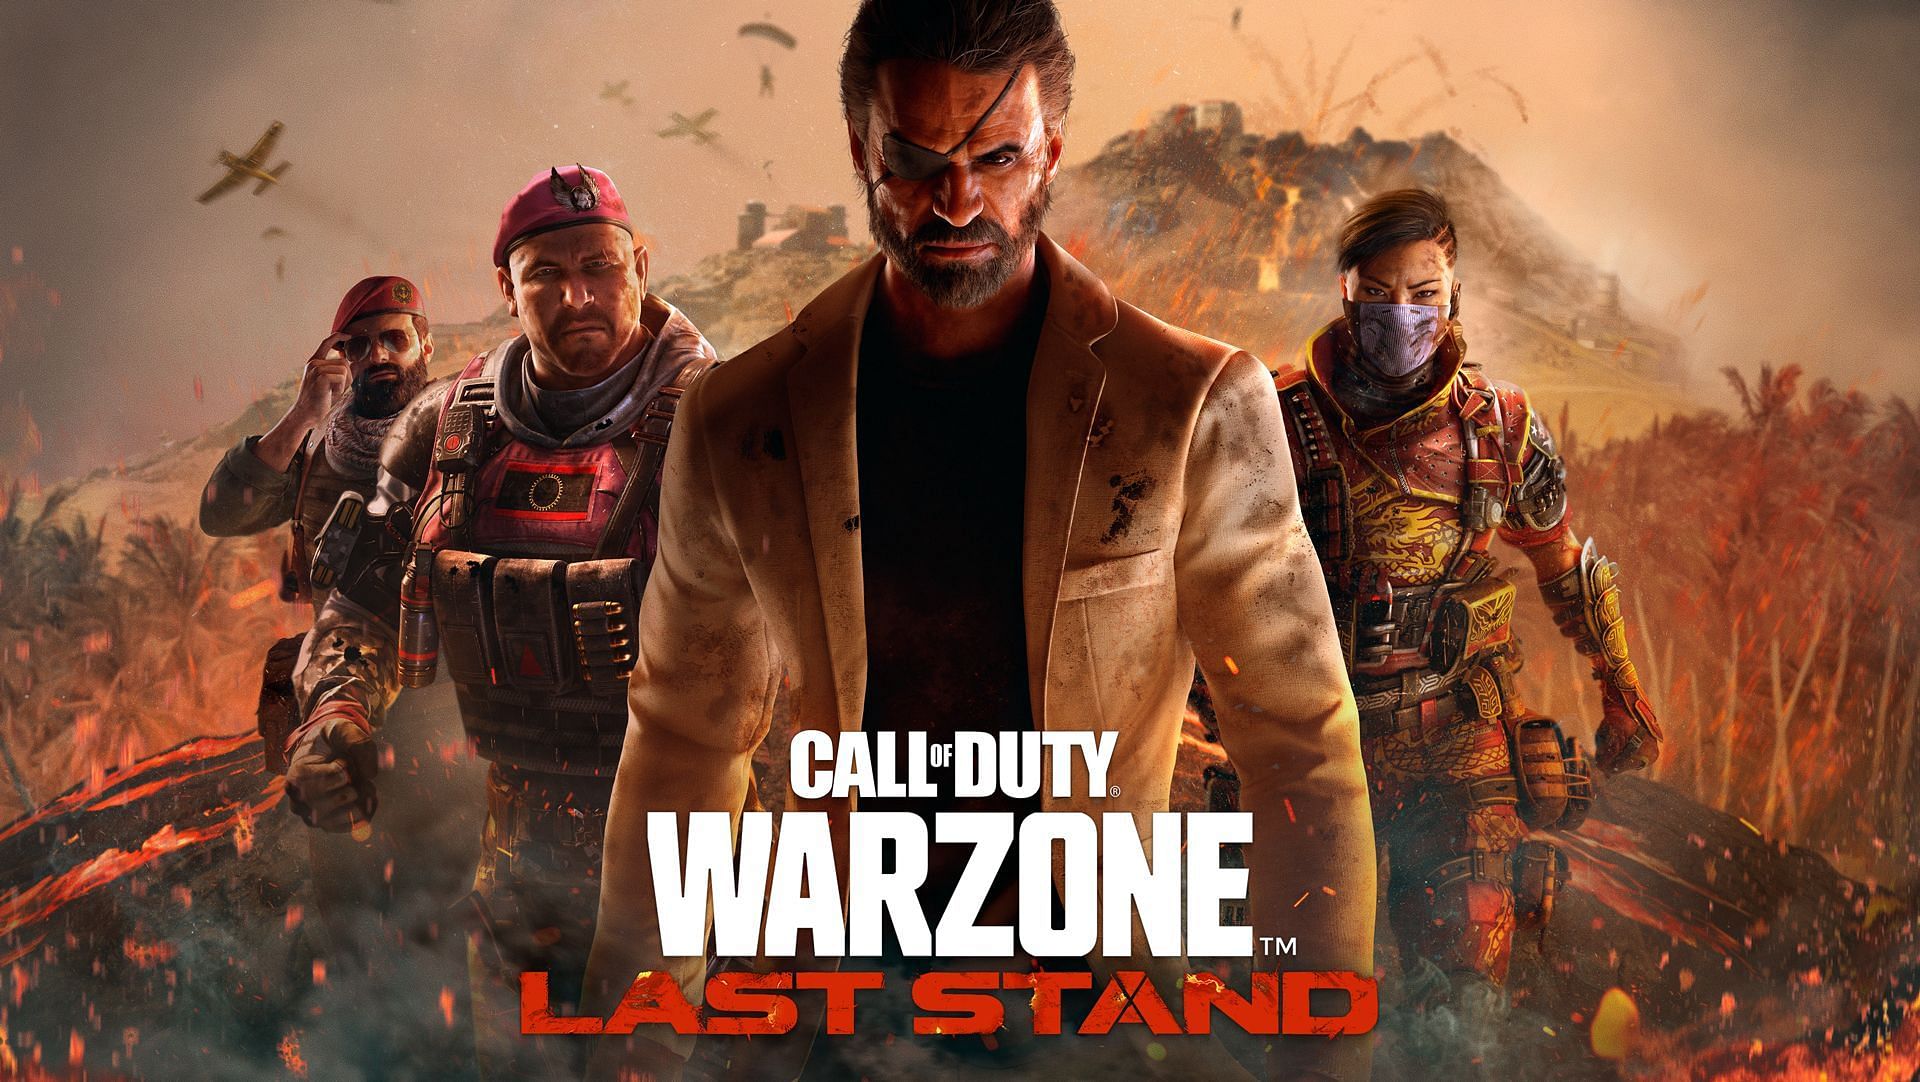 Call of Duty : Warzone Season 5 Last Stand (image via Activision)